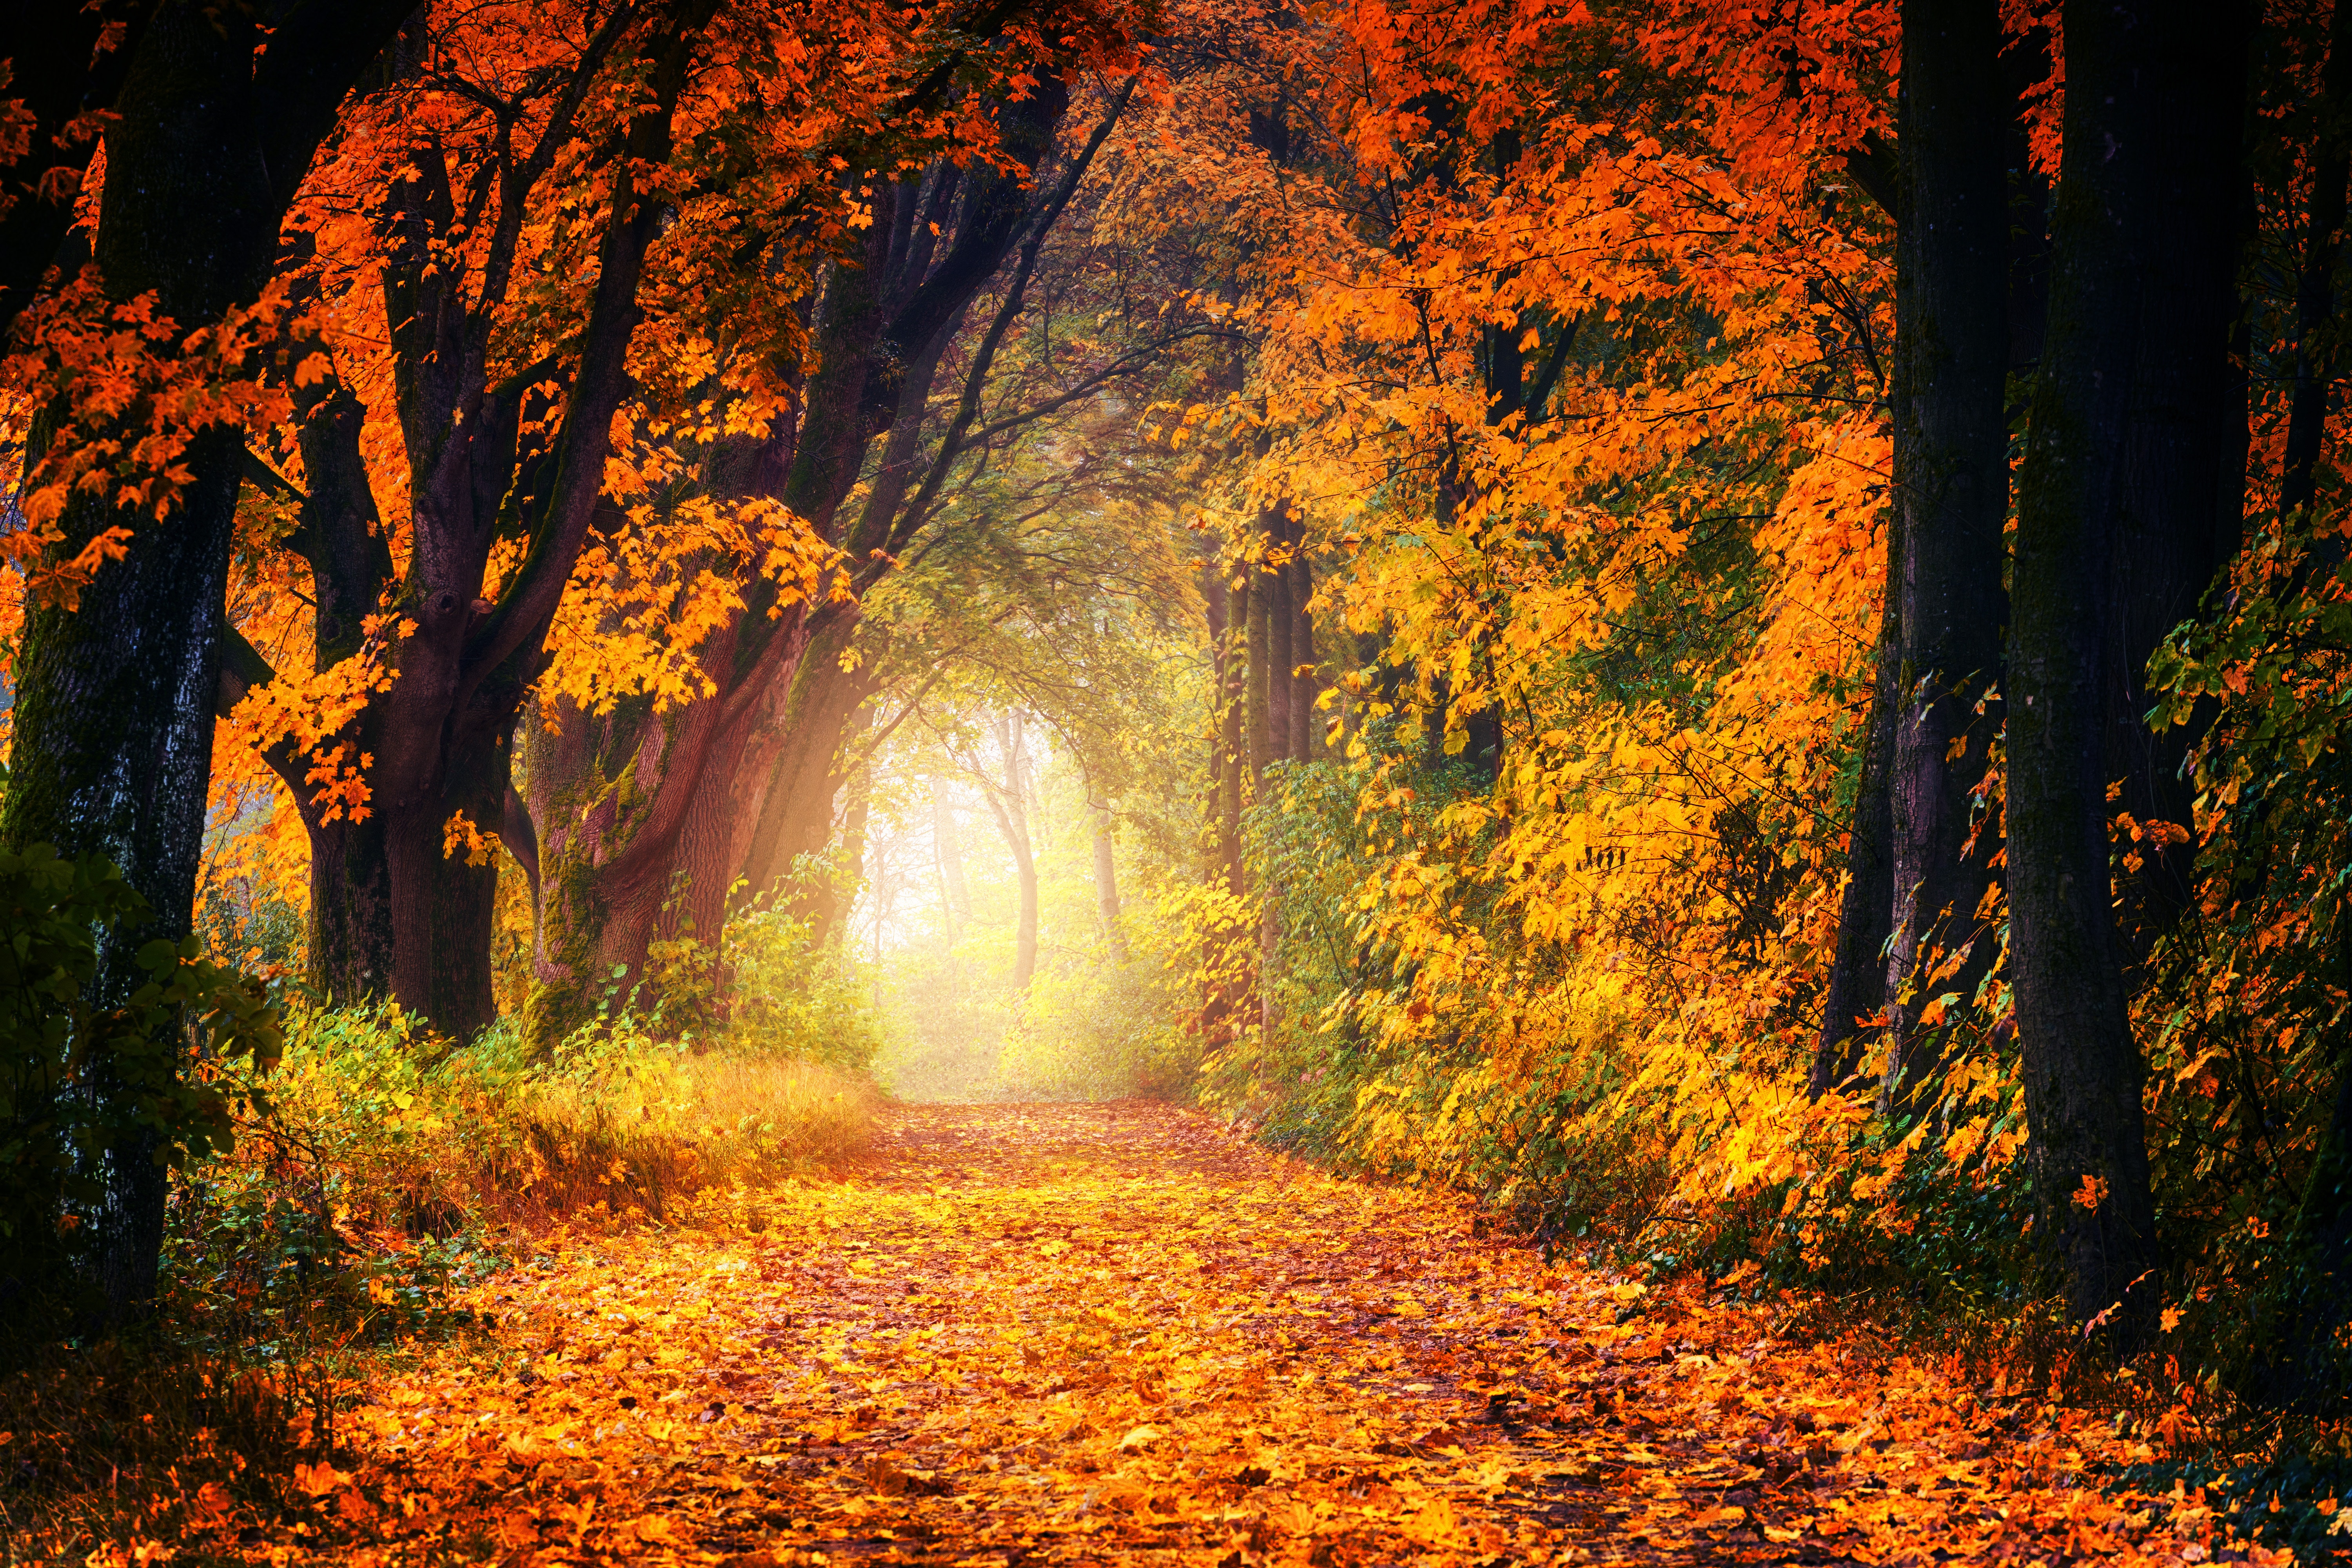 golden, shine, trees, nature, autumn, light, park, path, foliage